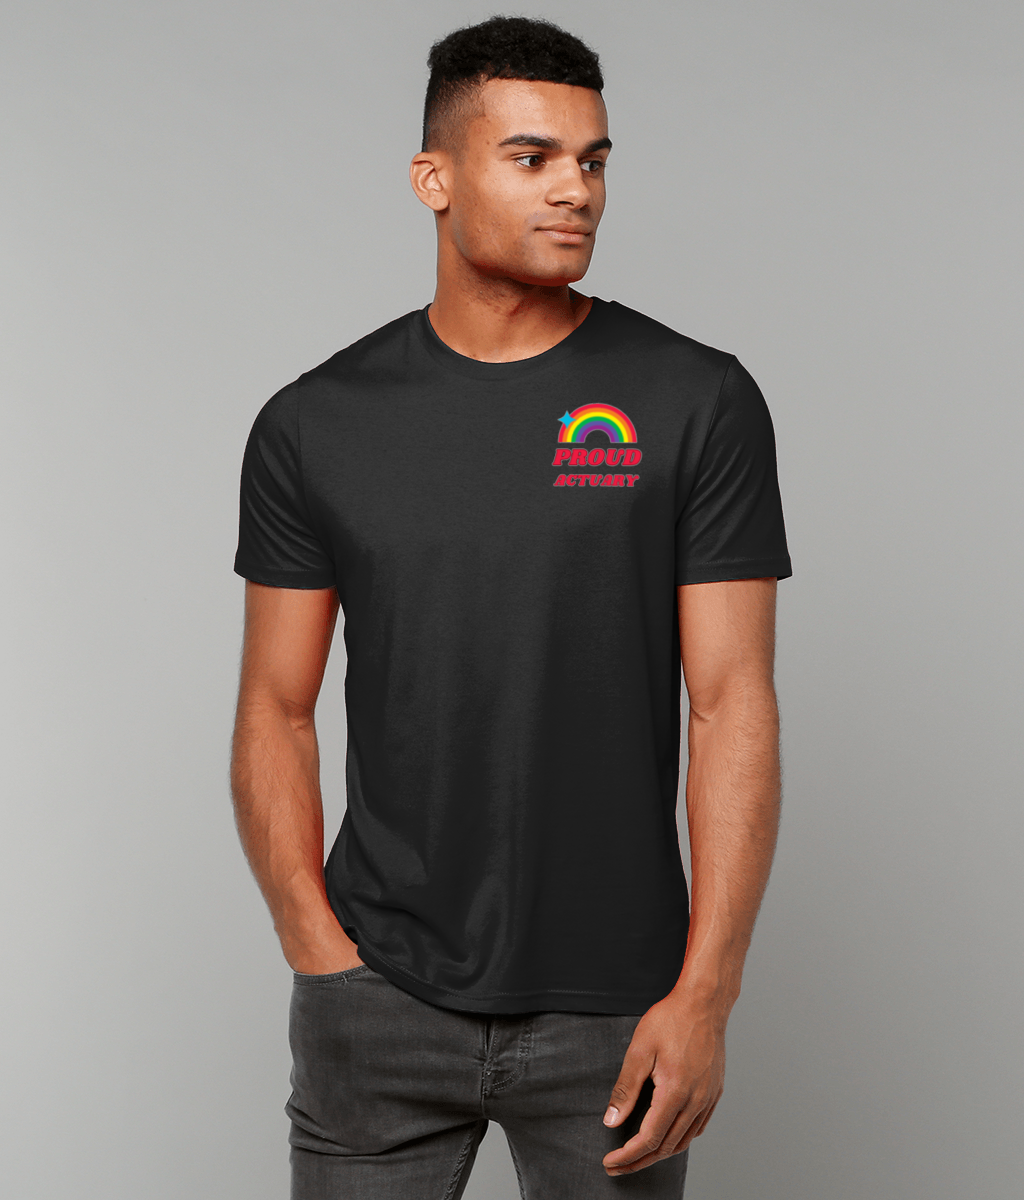 Proud Actuary Rainbow Corner Logo T-Shirt (Black and White Variants)